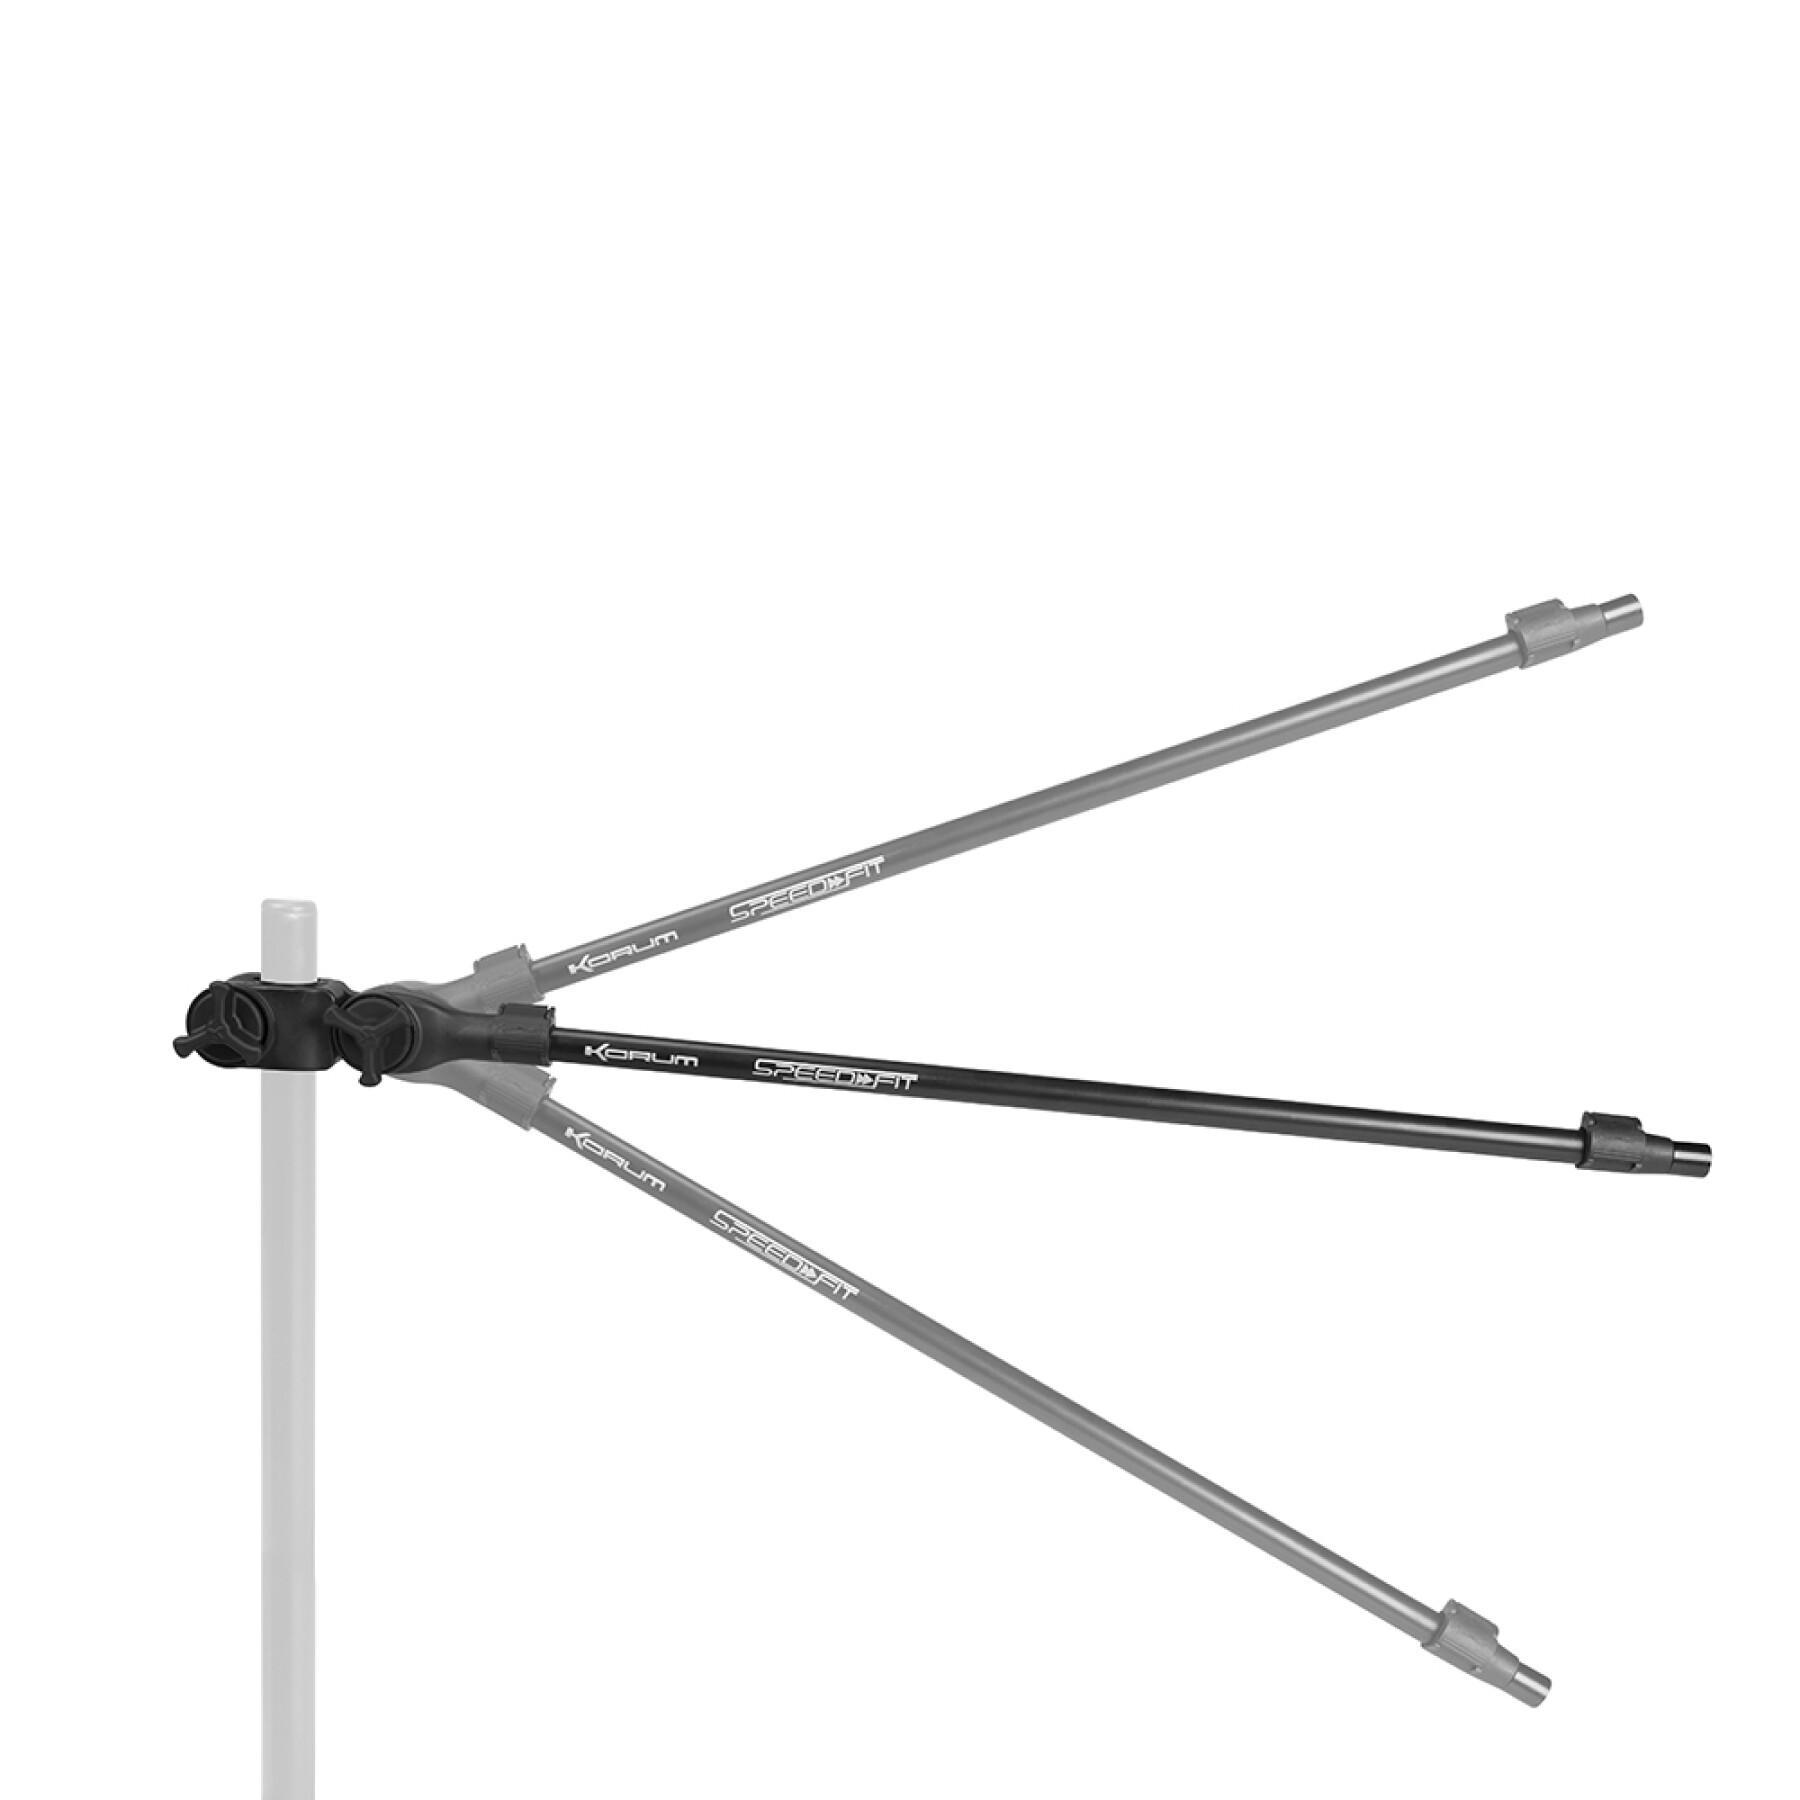 Telescopic feeder stand Korum Speed Fit Arm 1x2